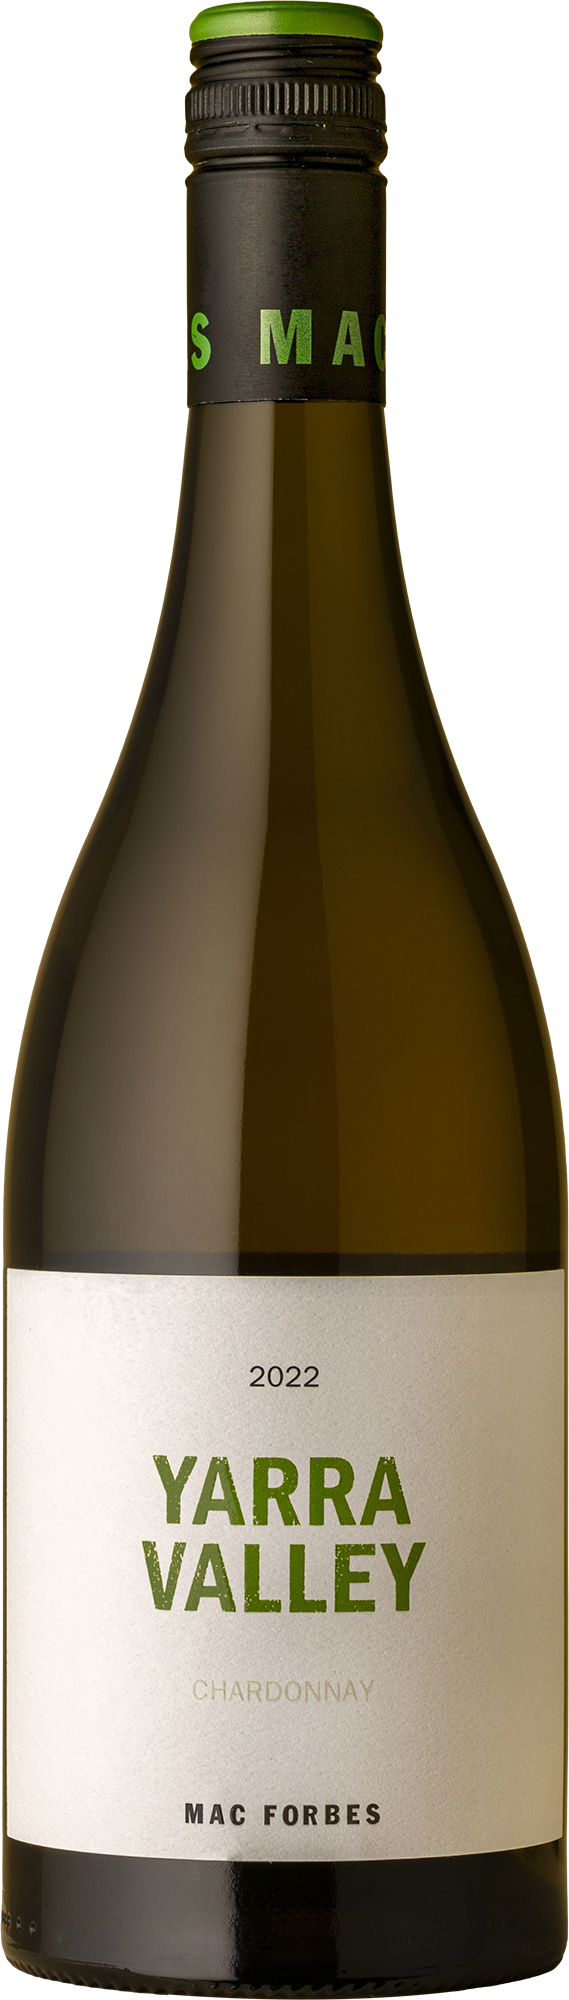 Mac Forbes - Yarra Valley Chardonnay 2022 White Wine